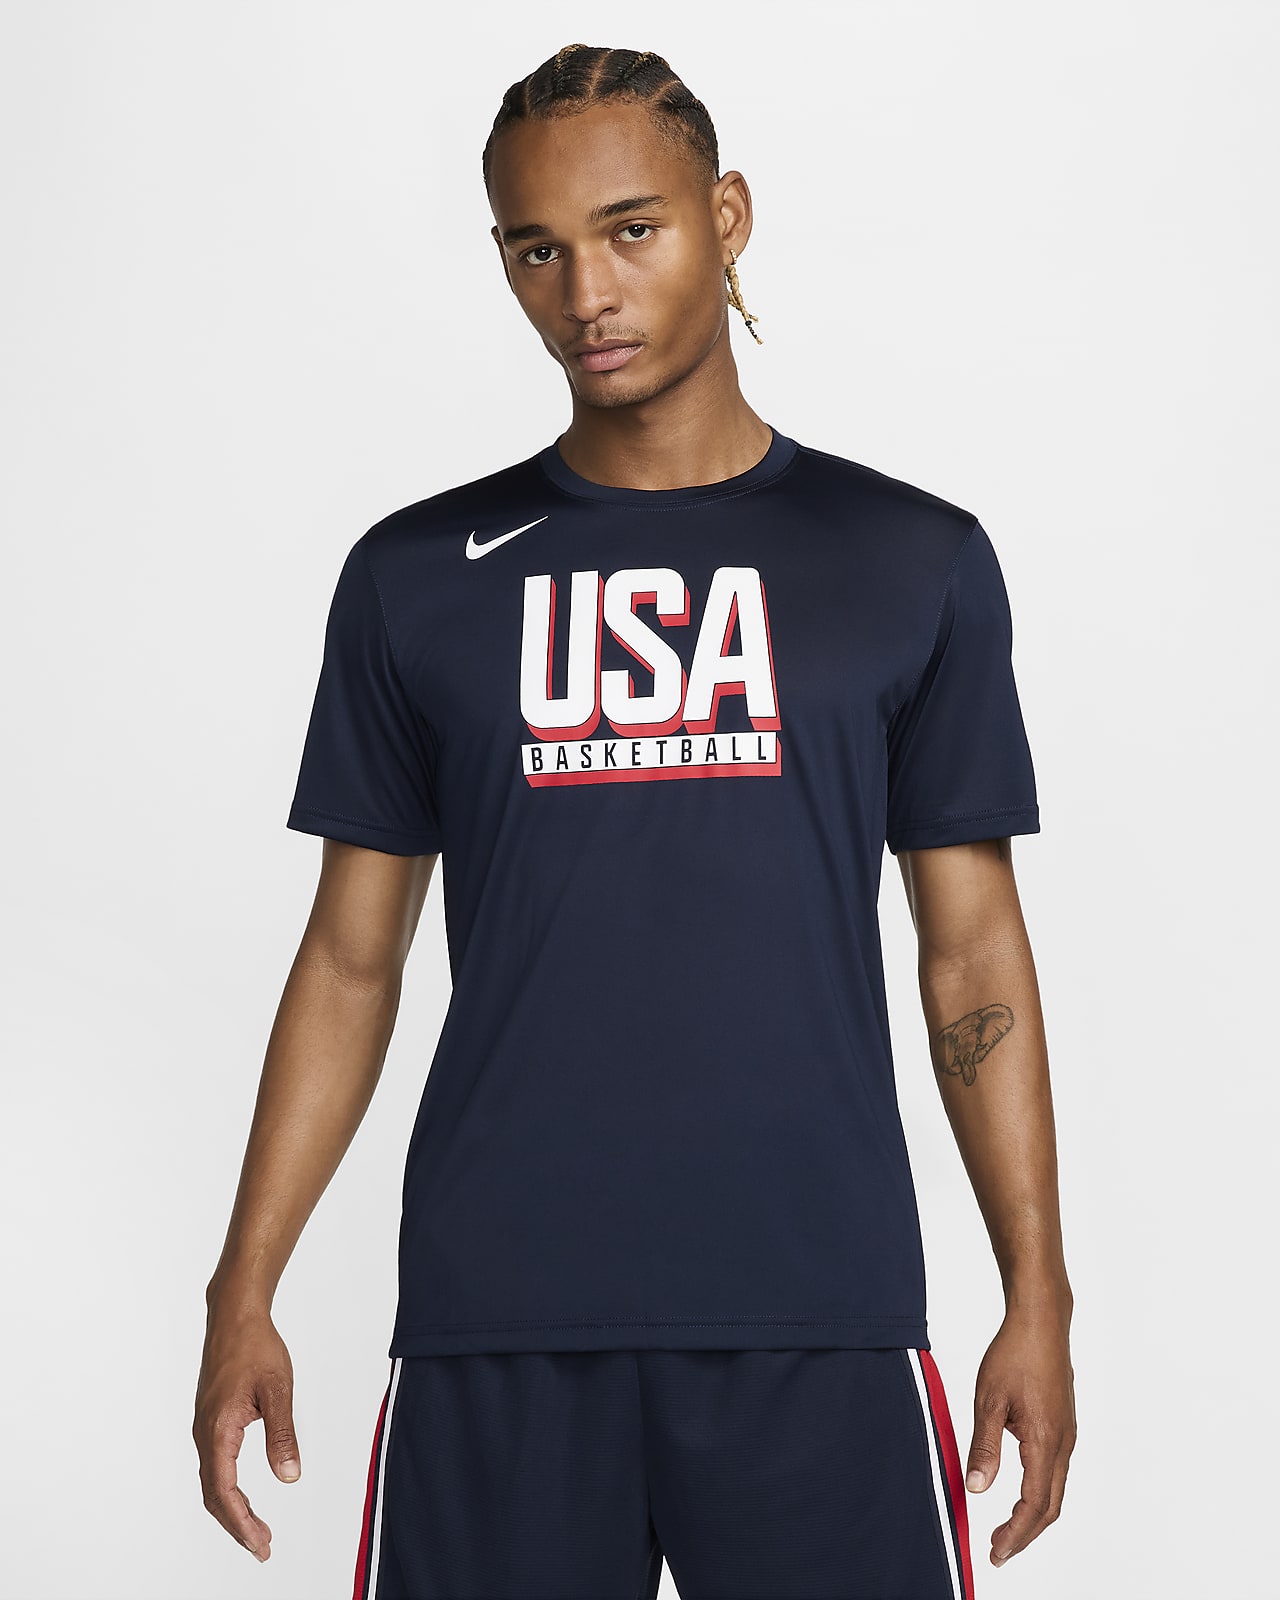 USA Training Men's Nike Basketball T-Shirt